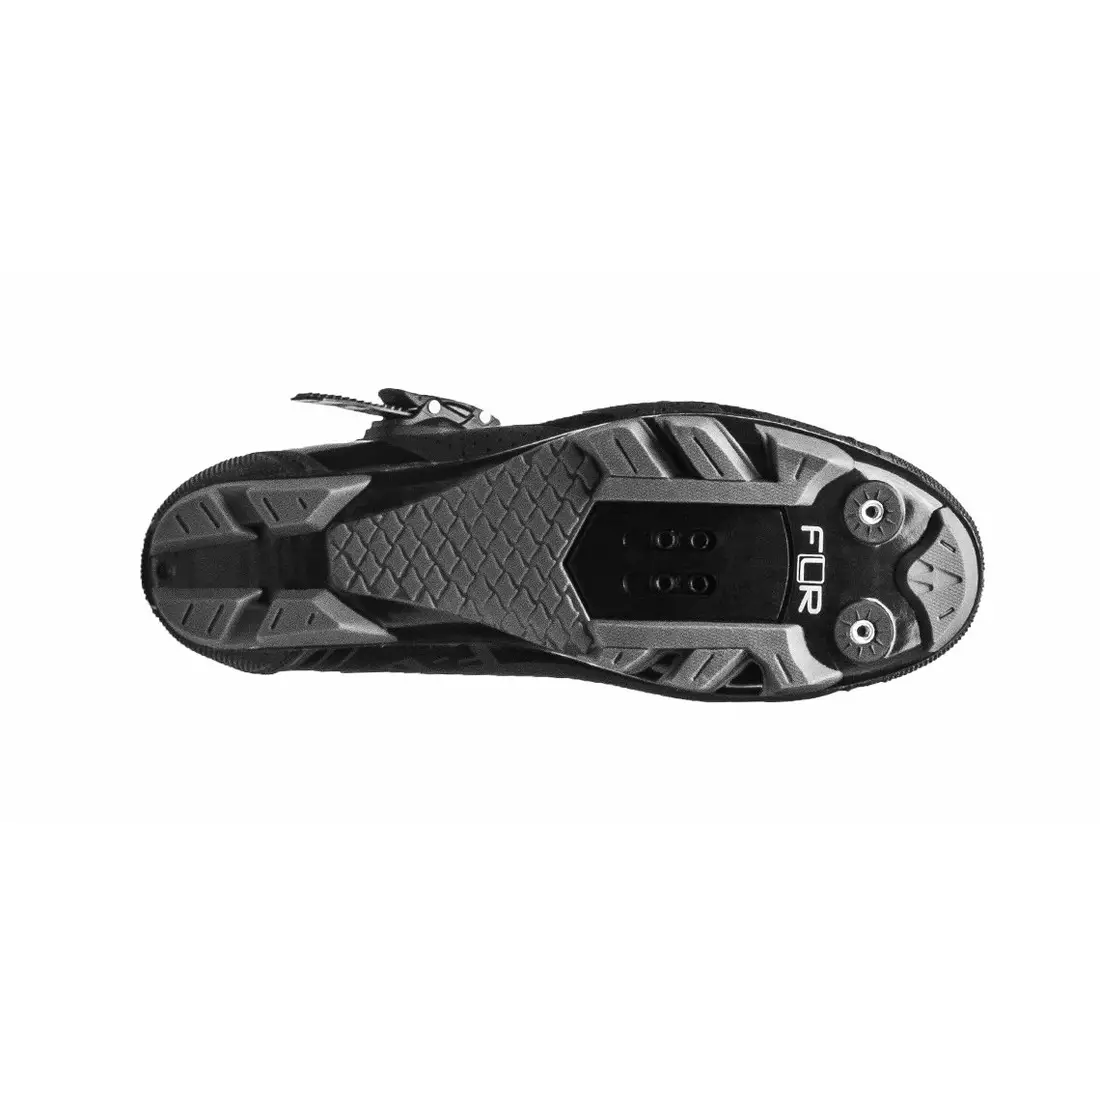 FLR F-65 MTB cycling shoes, black